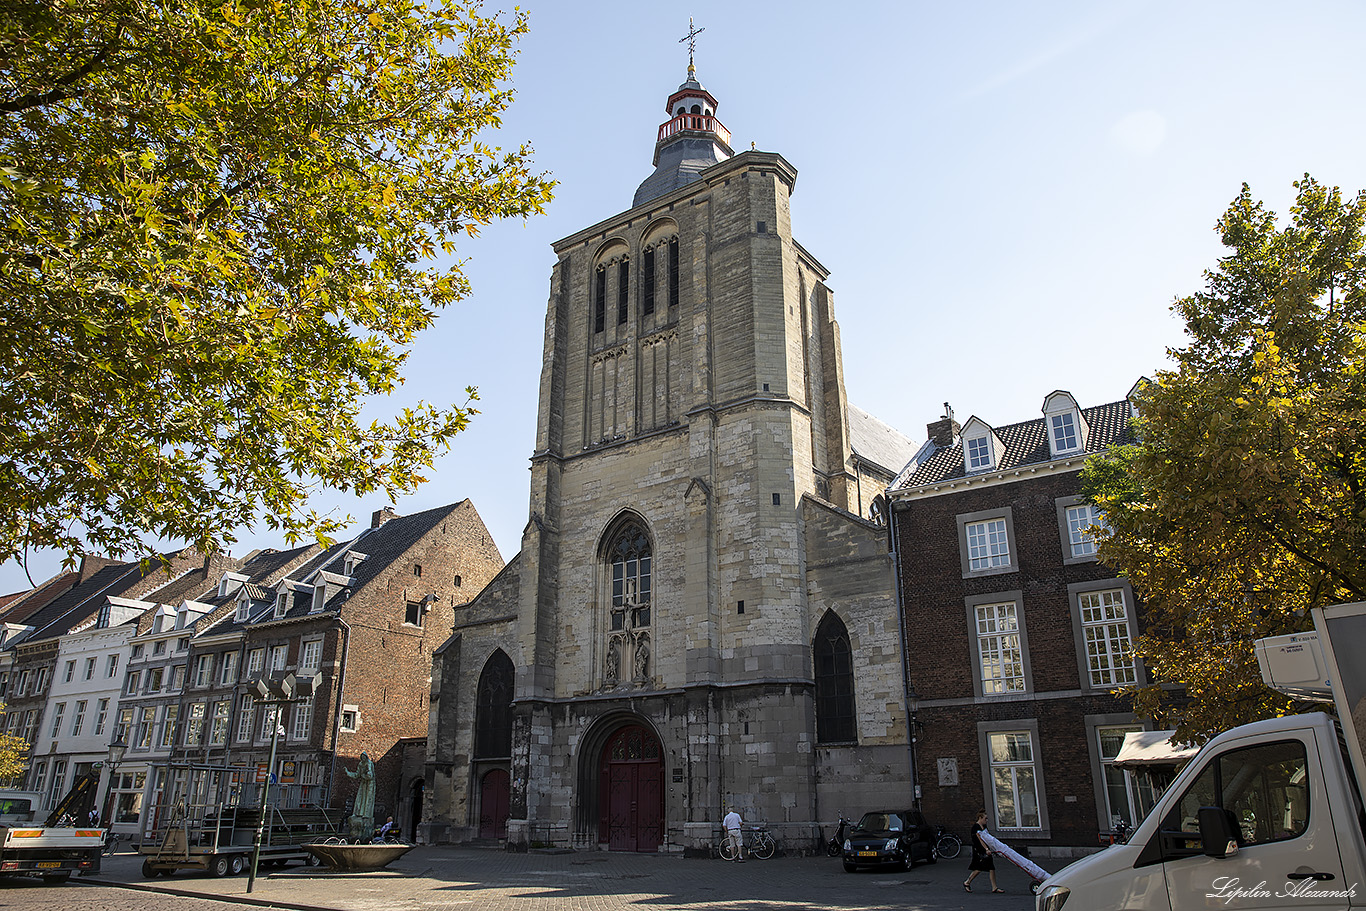 Маастрихт (Maastricht) - Нидерланды (Nederland)